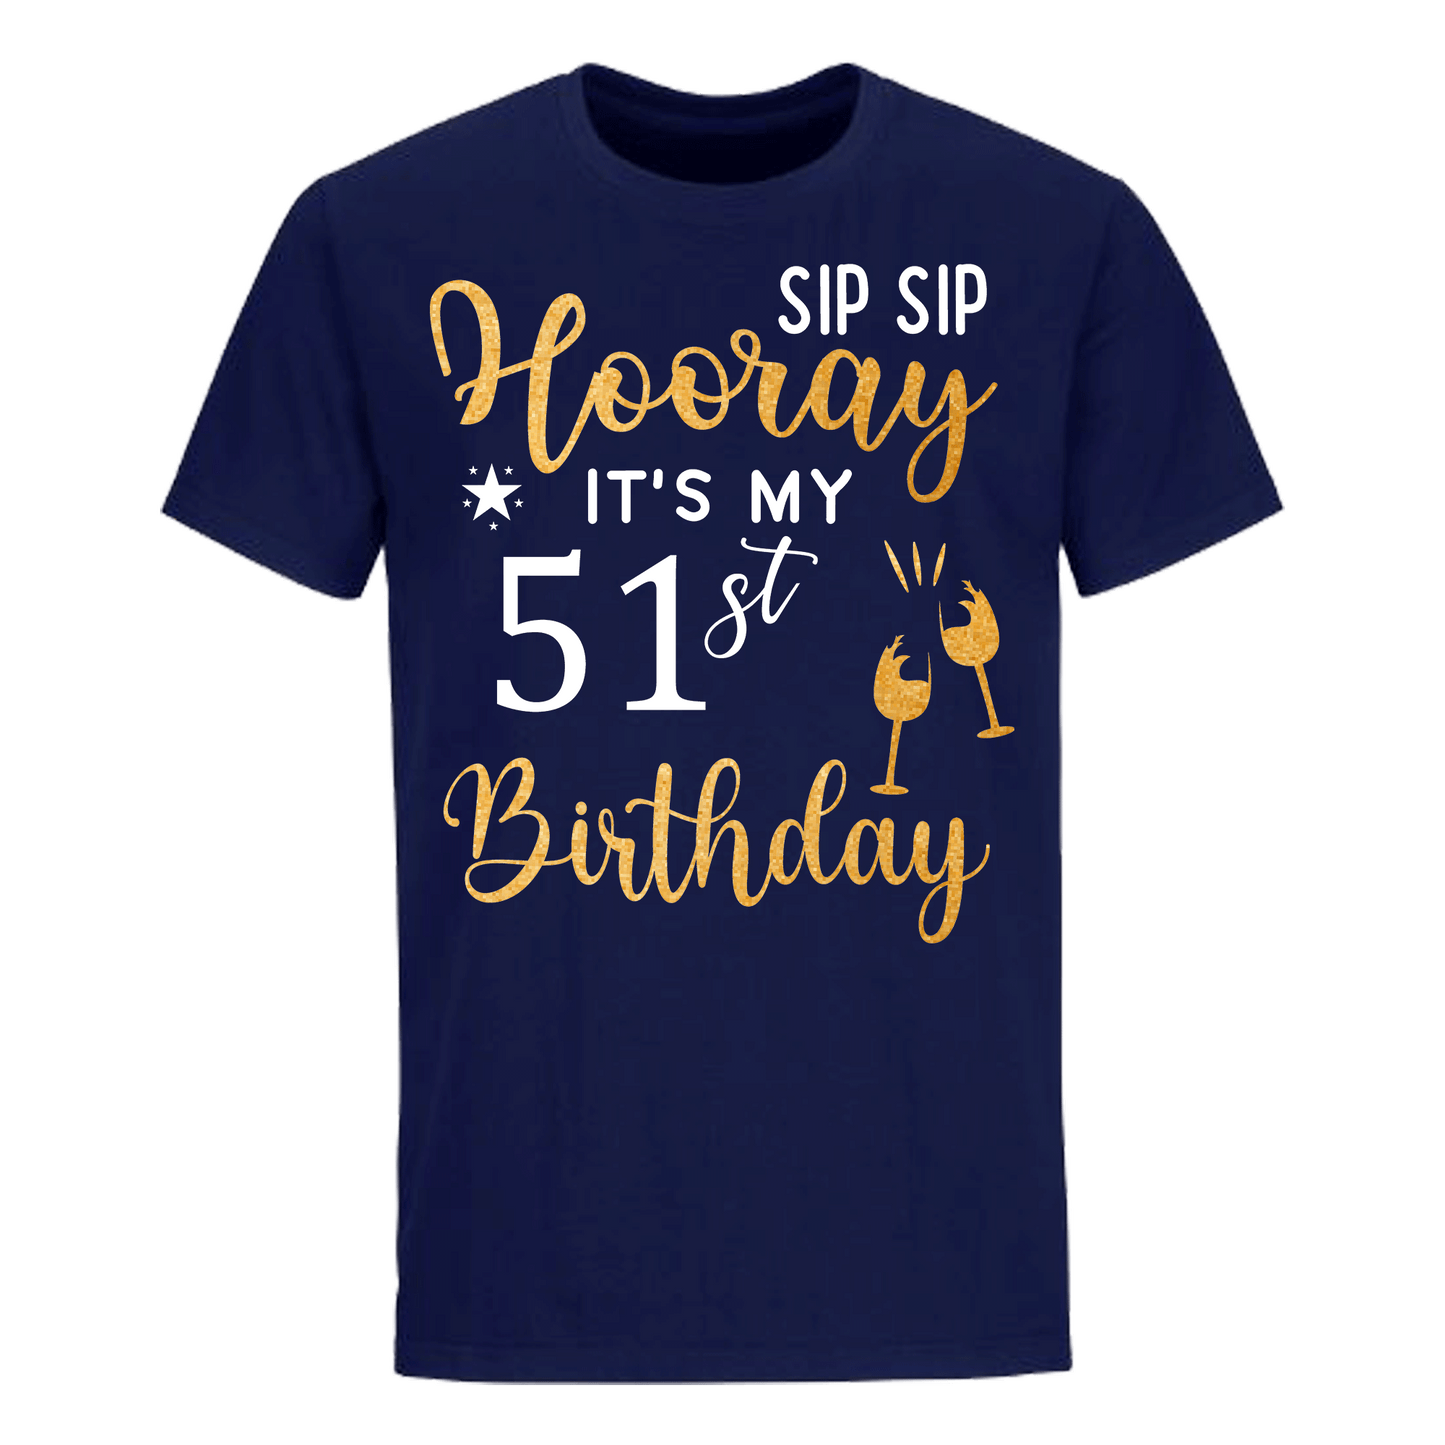 HOORAY IT'S MY 51st BIRTHDAY SHIRT